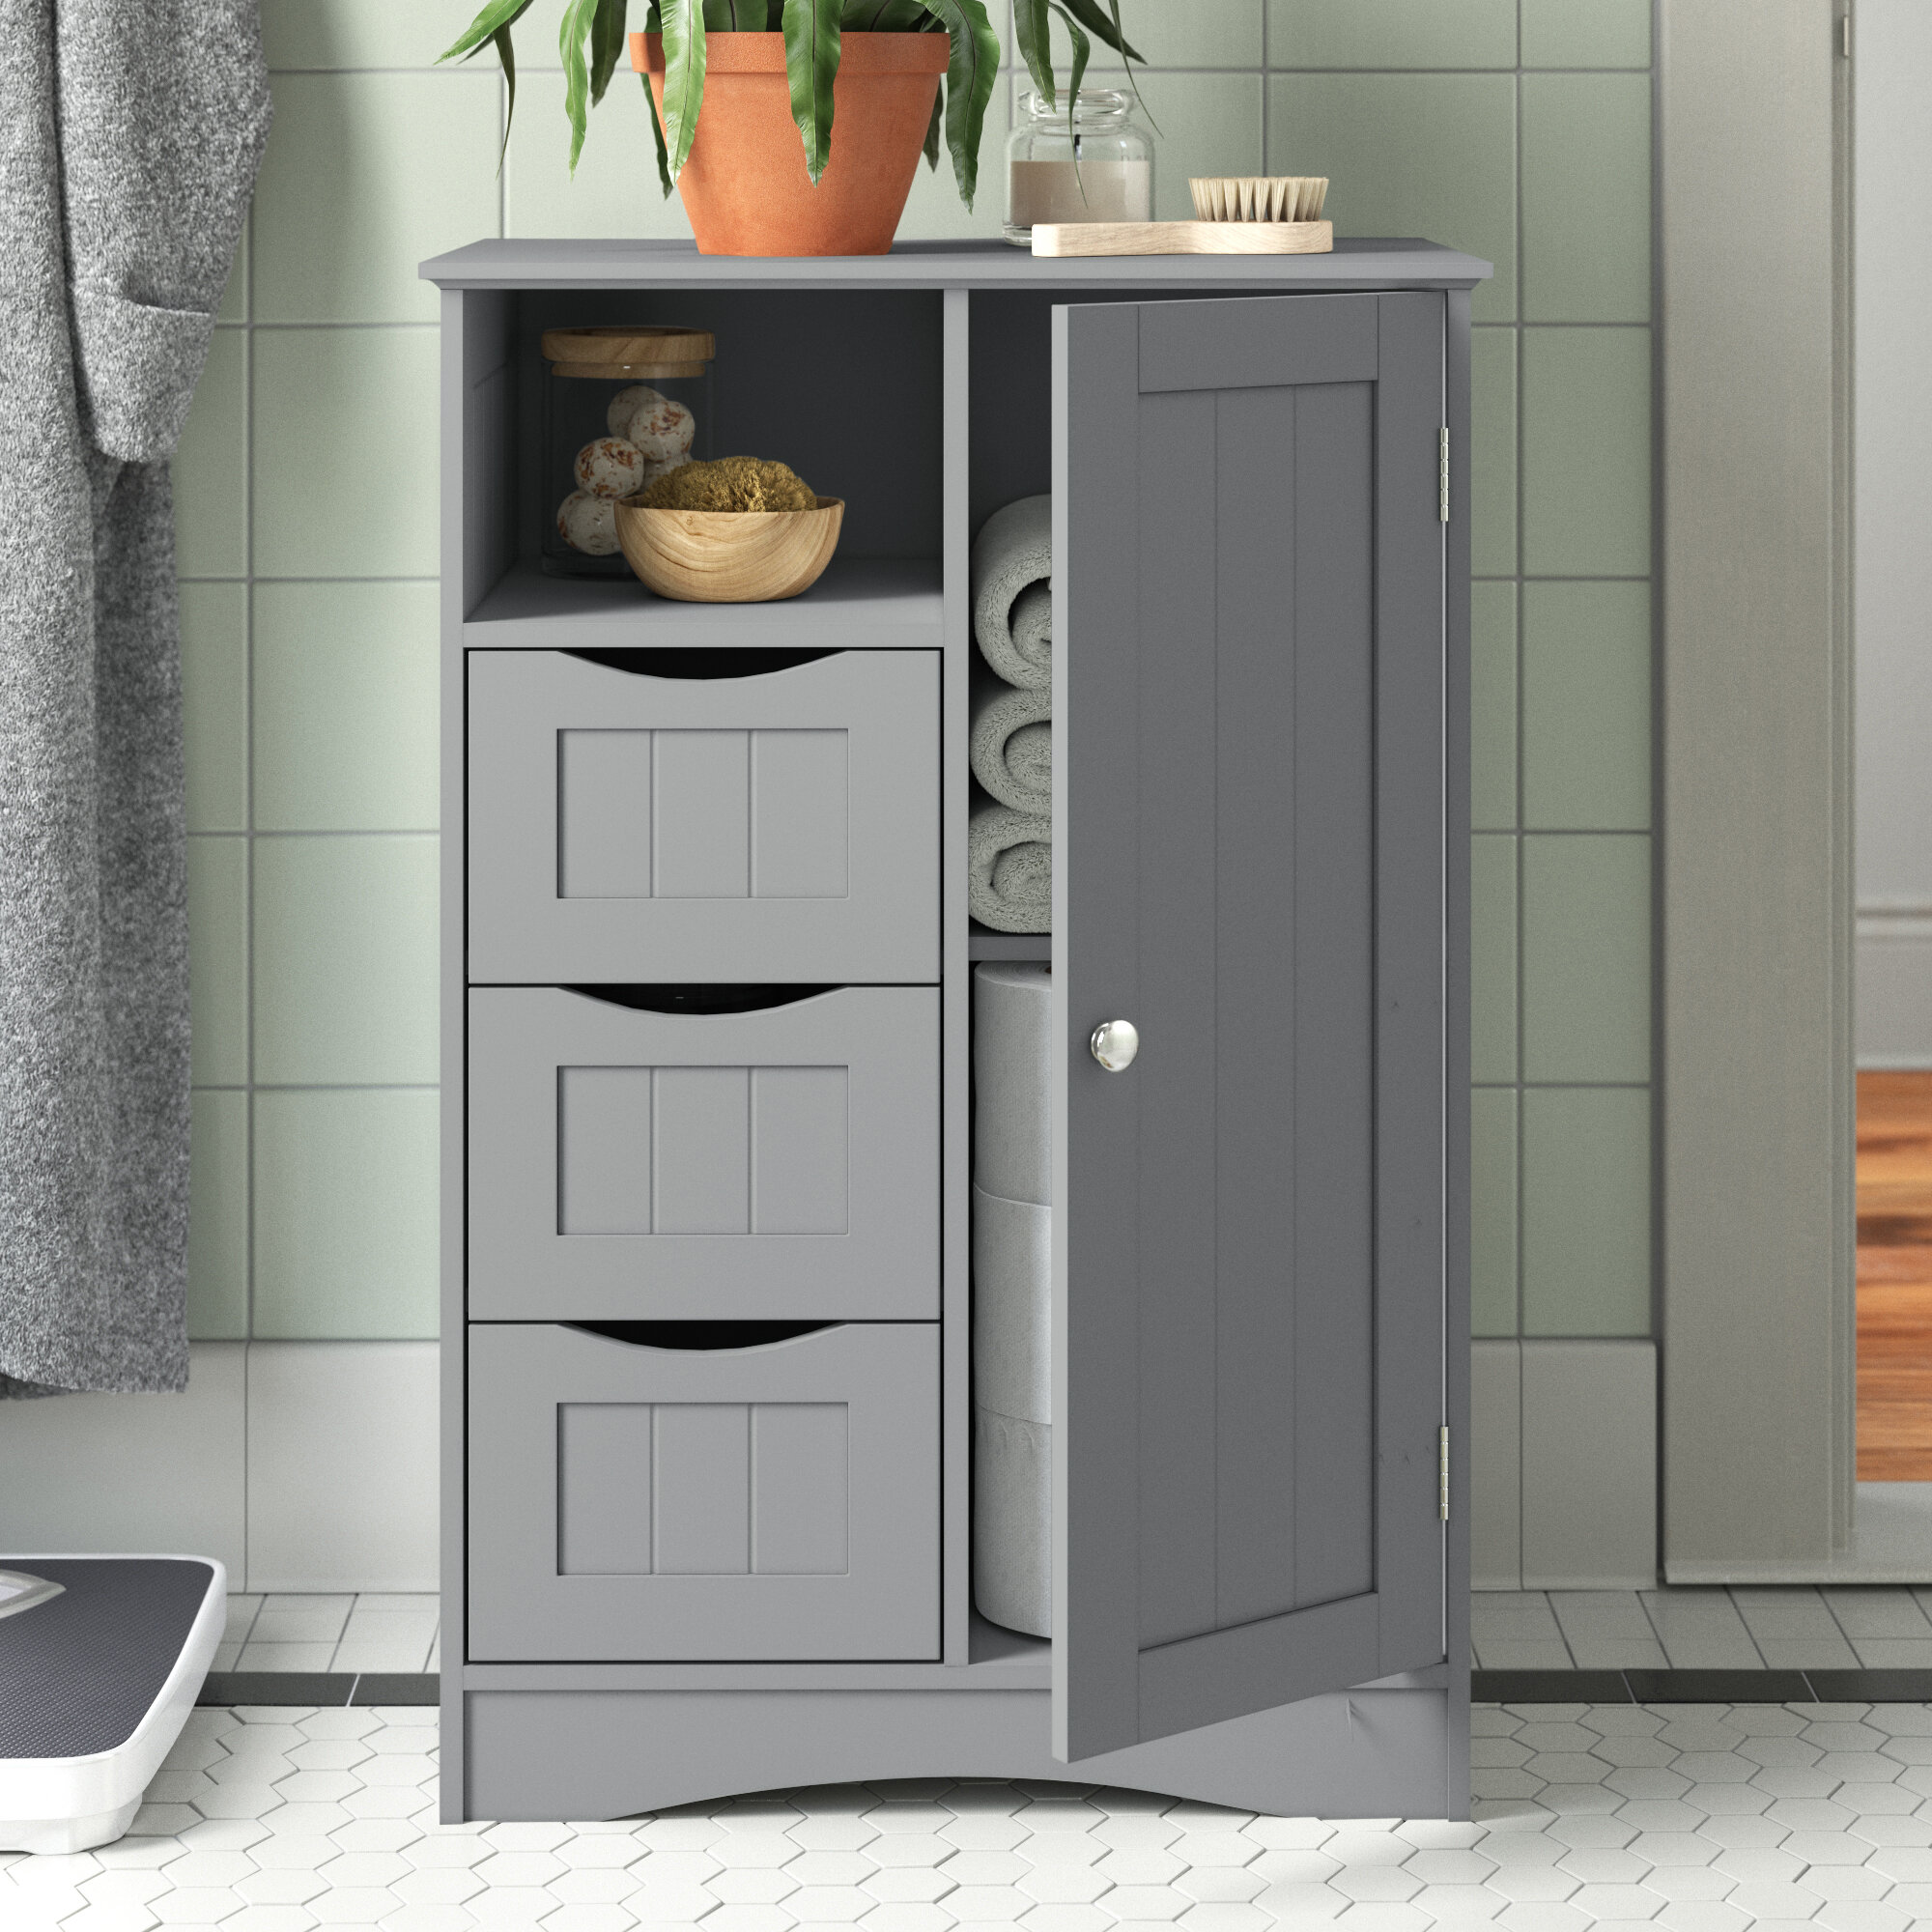 4-Door Tall Storage Cabinet Wood Chest Organizer Shelves Bathroom Towels Brown 